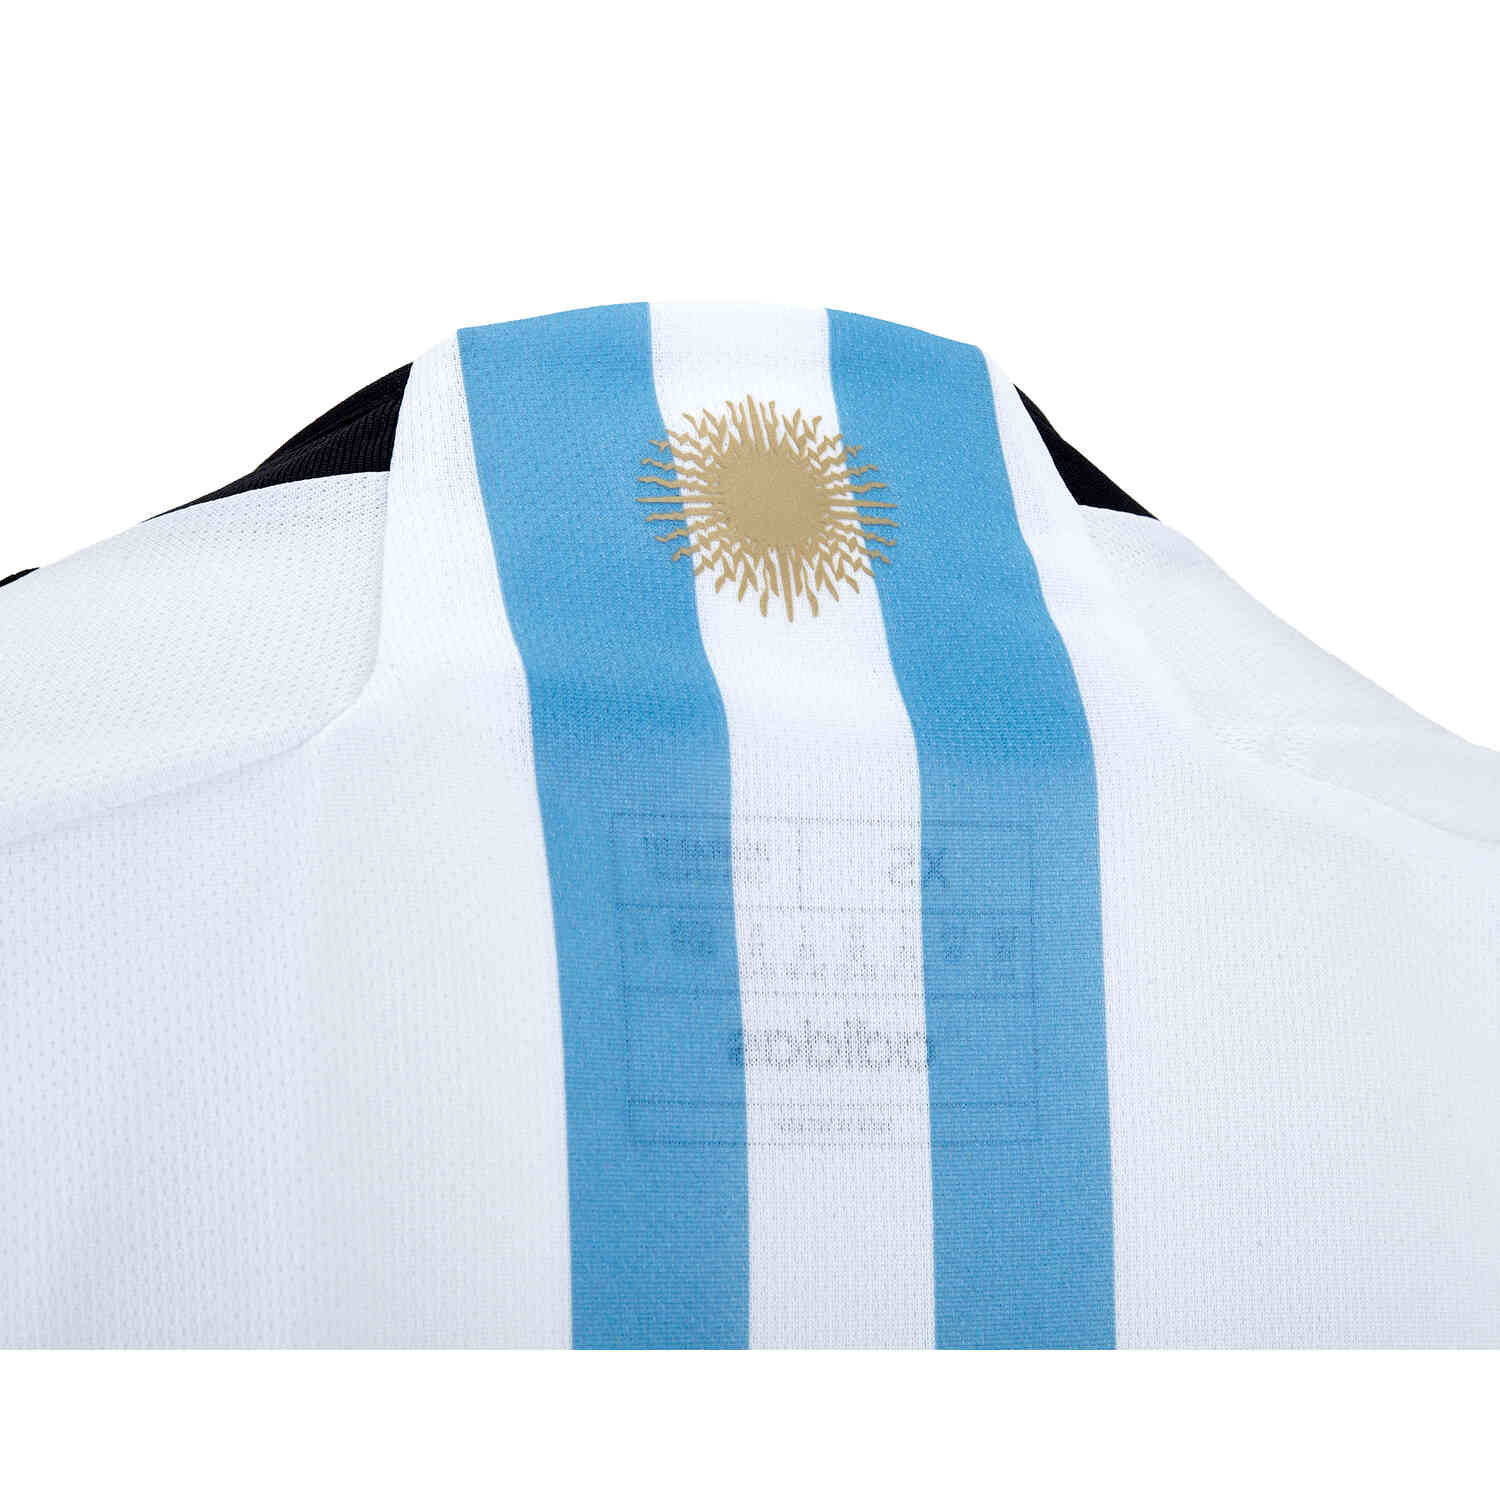 messi argentina jersey women's